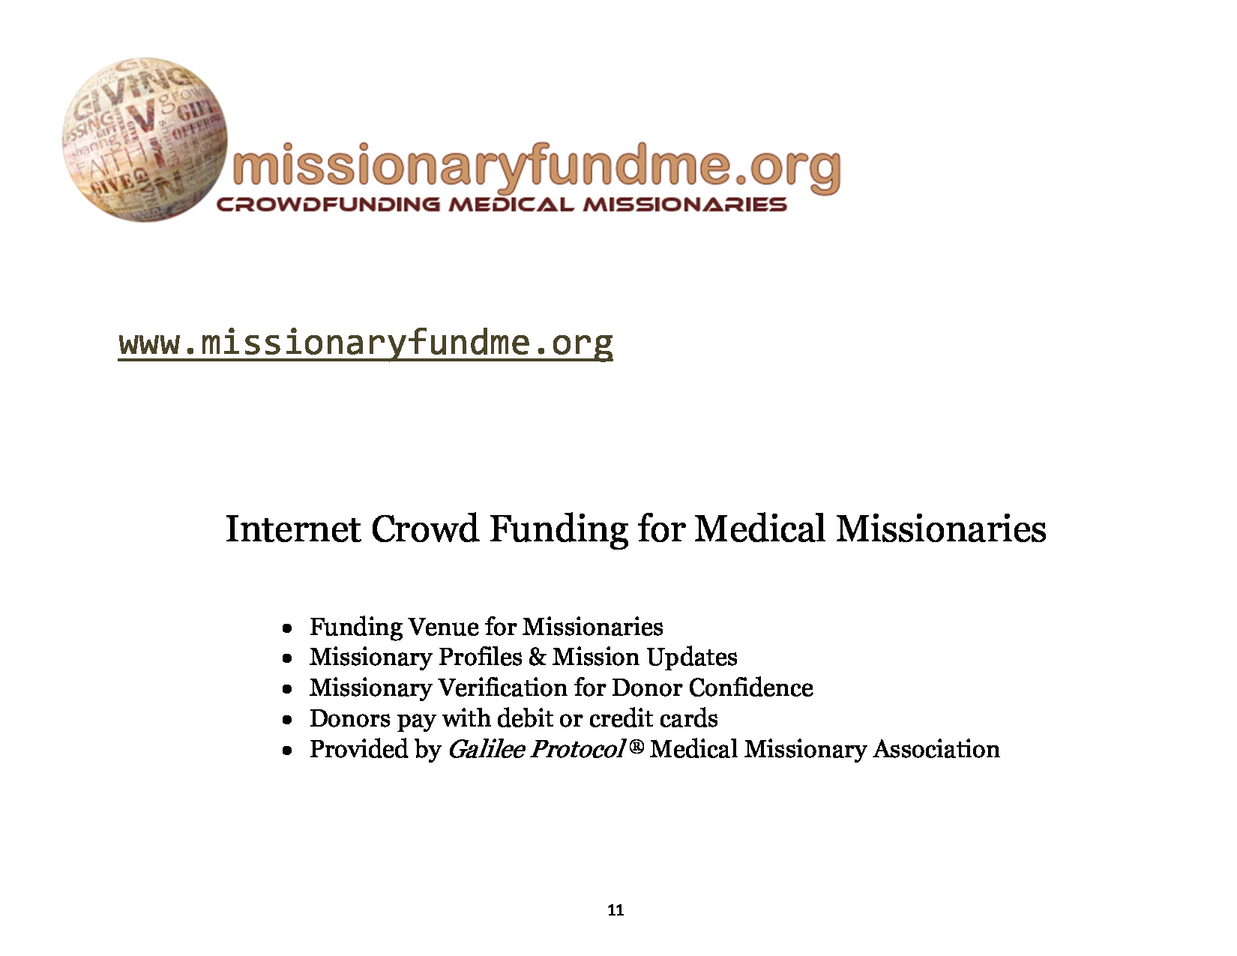 11_missionaryfundme